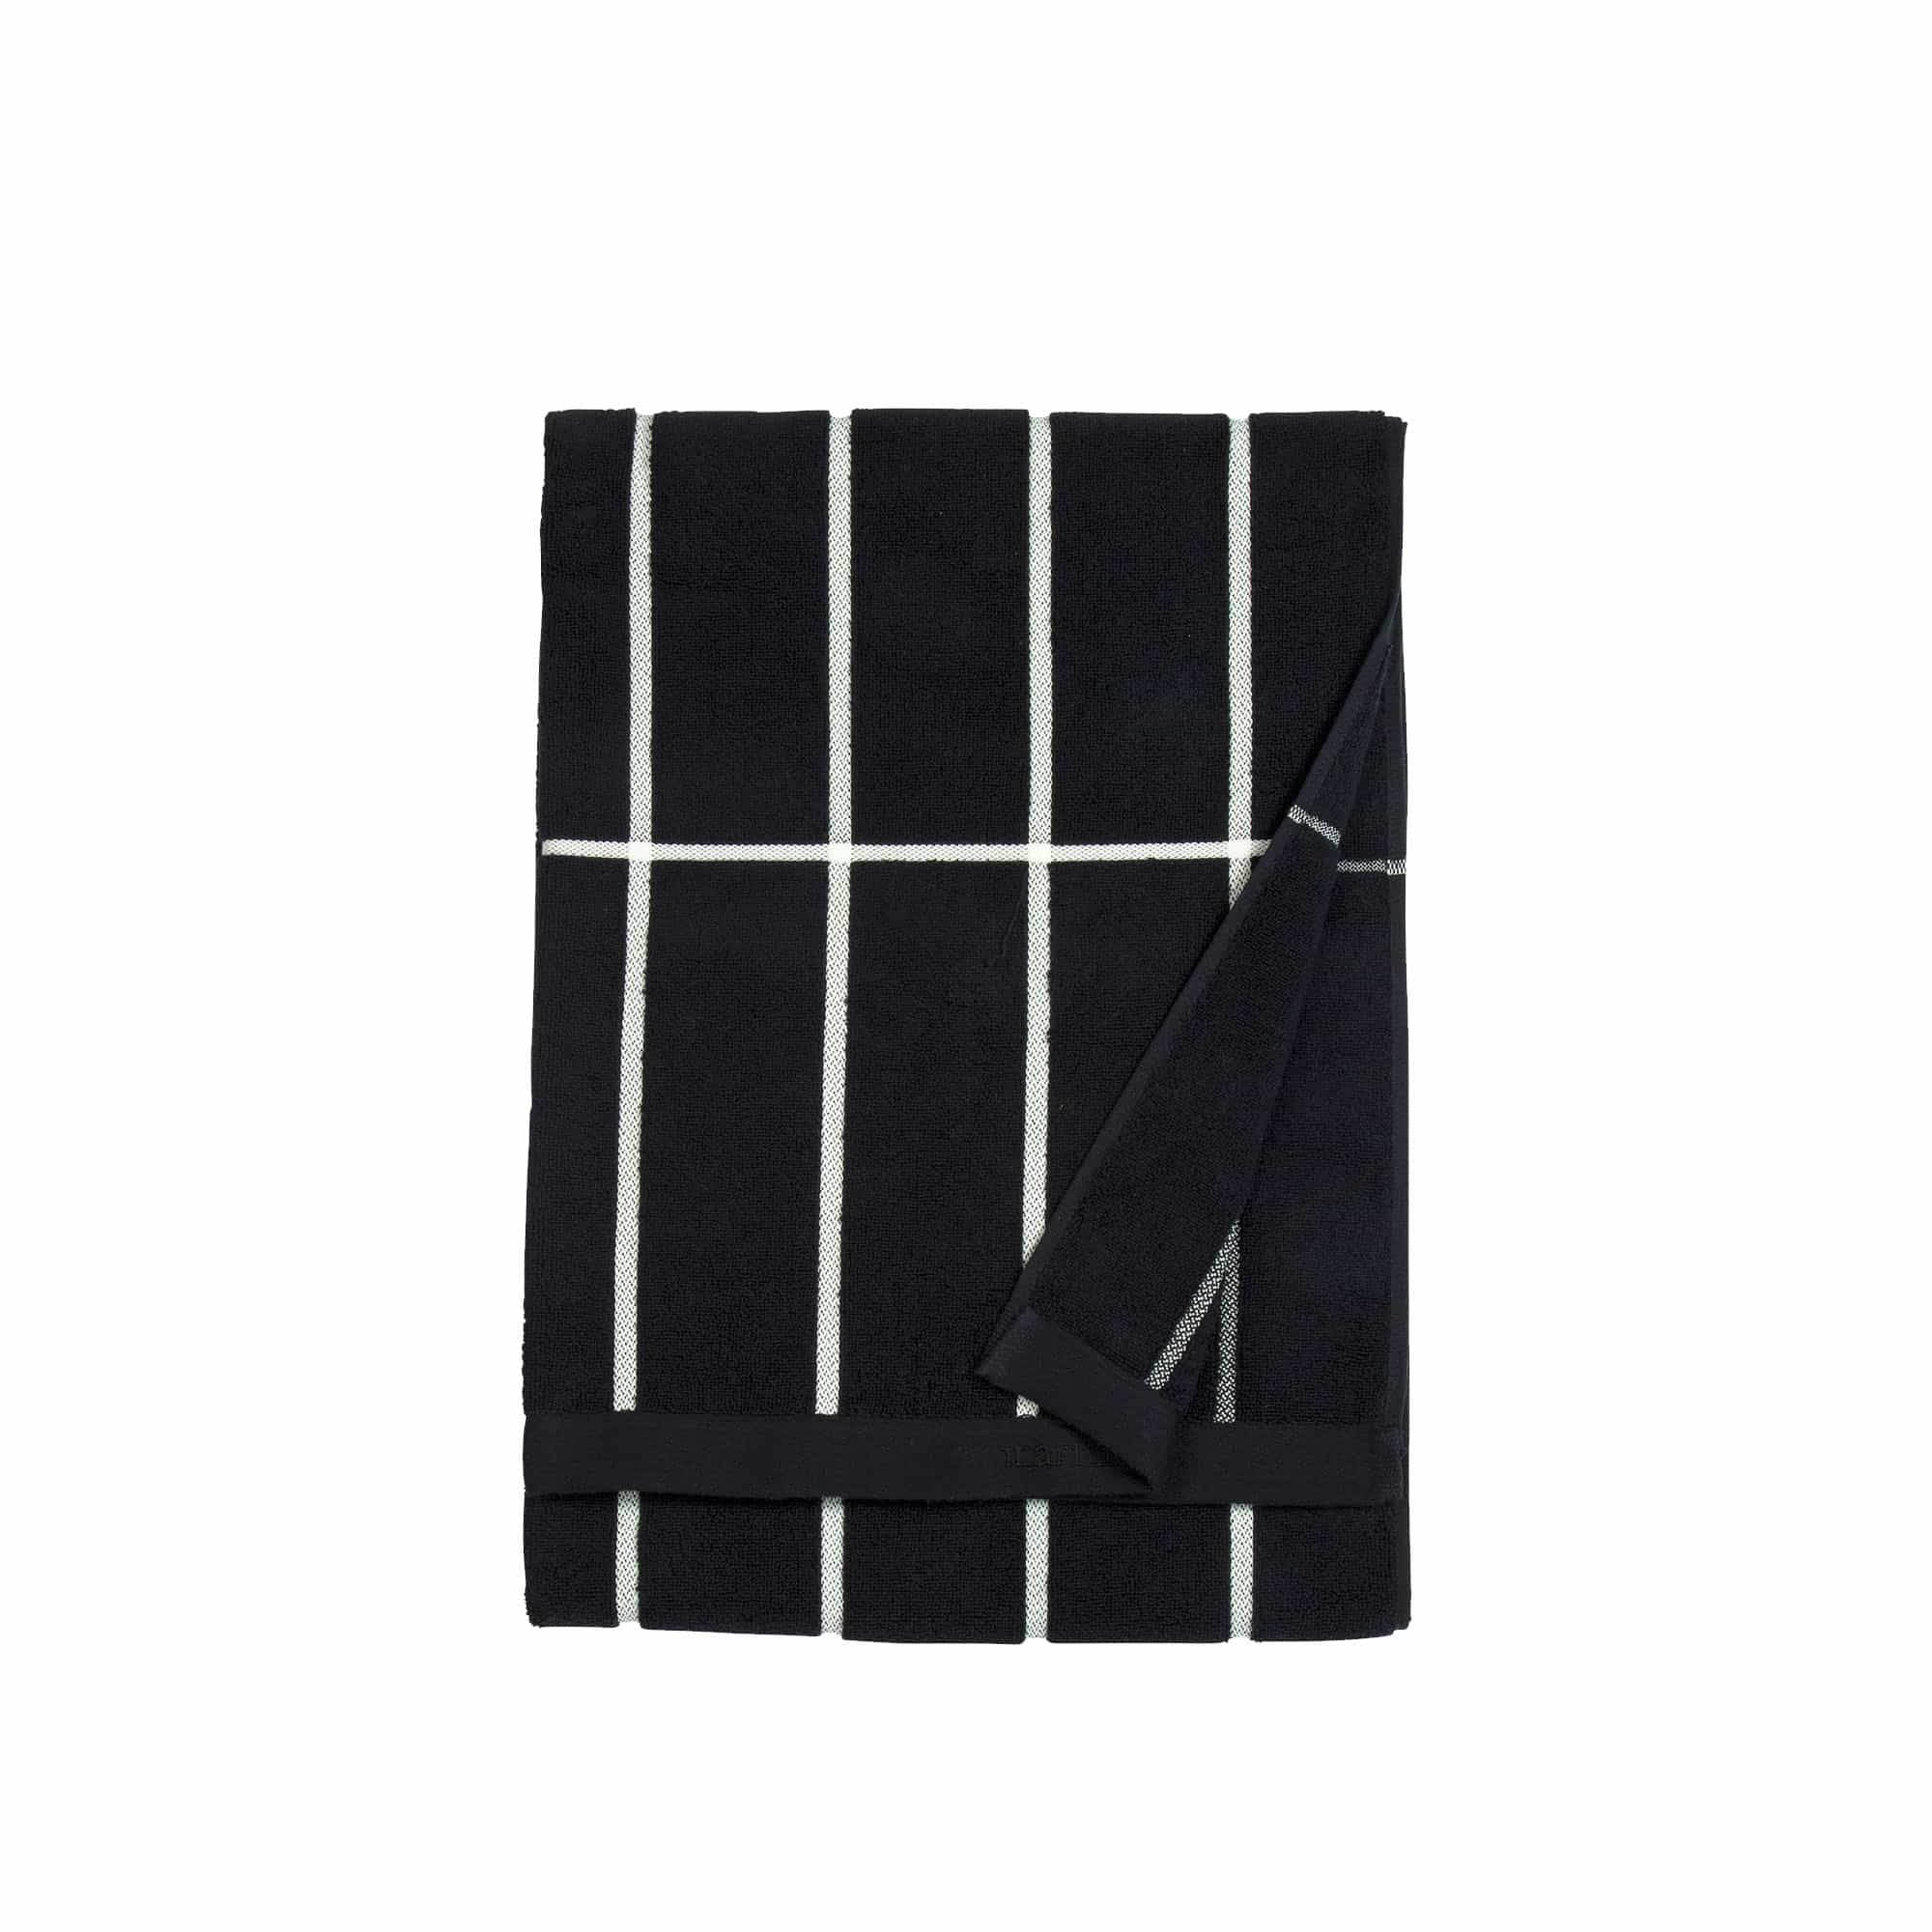 Tiiliskivi Bath Towel 70X150 cm Black, White